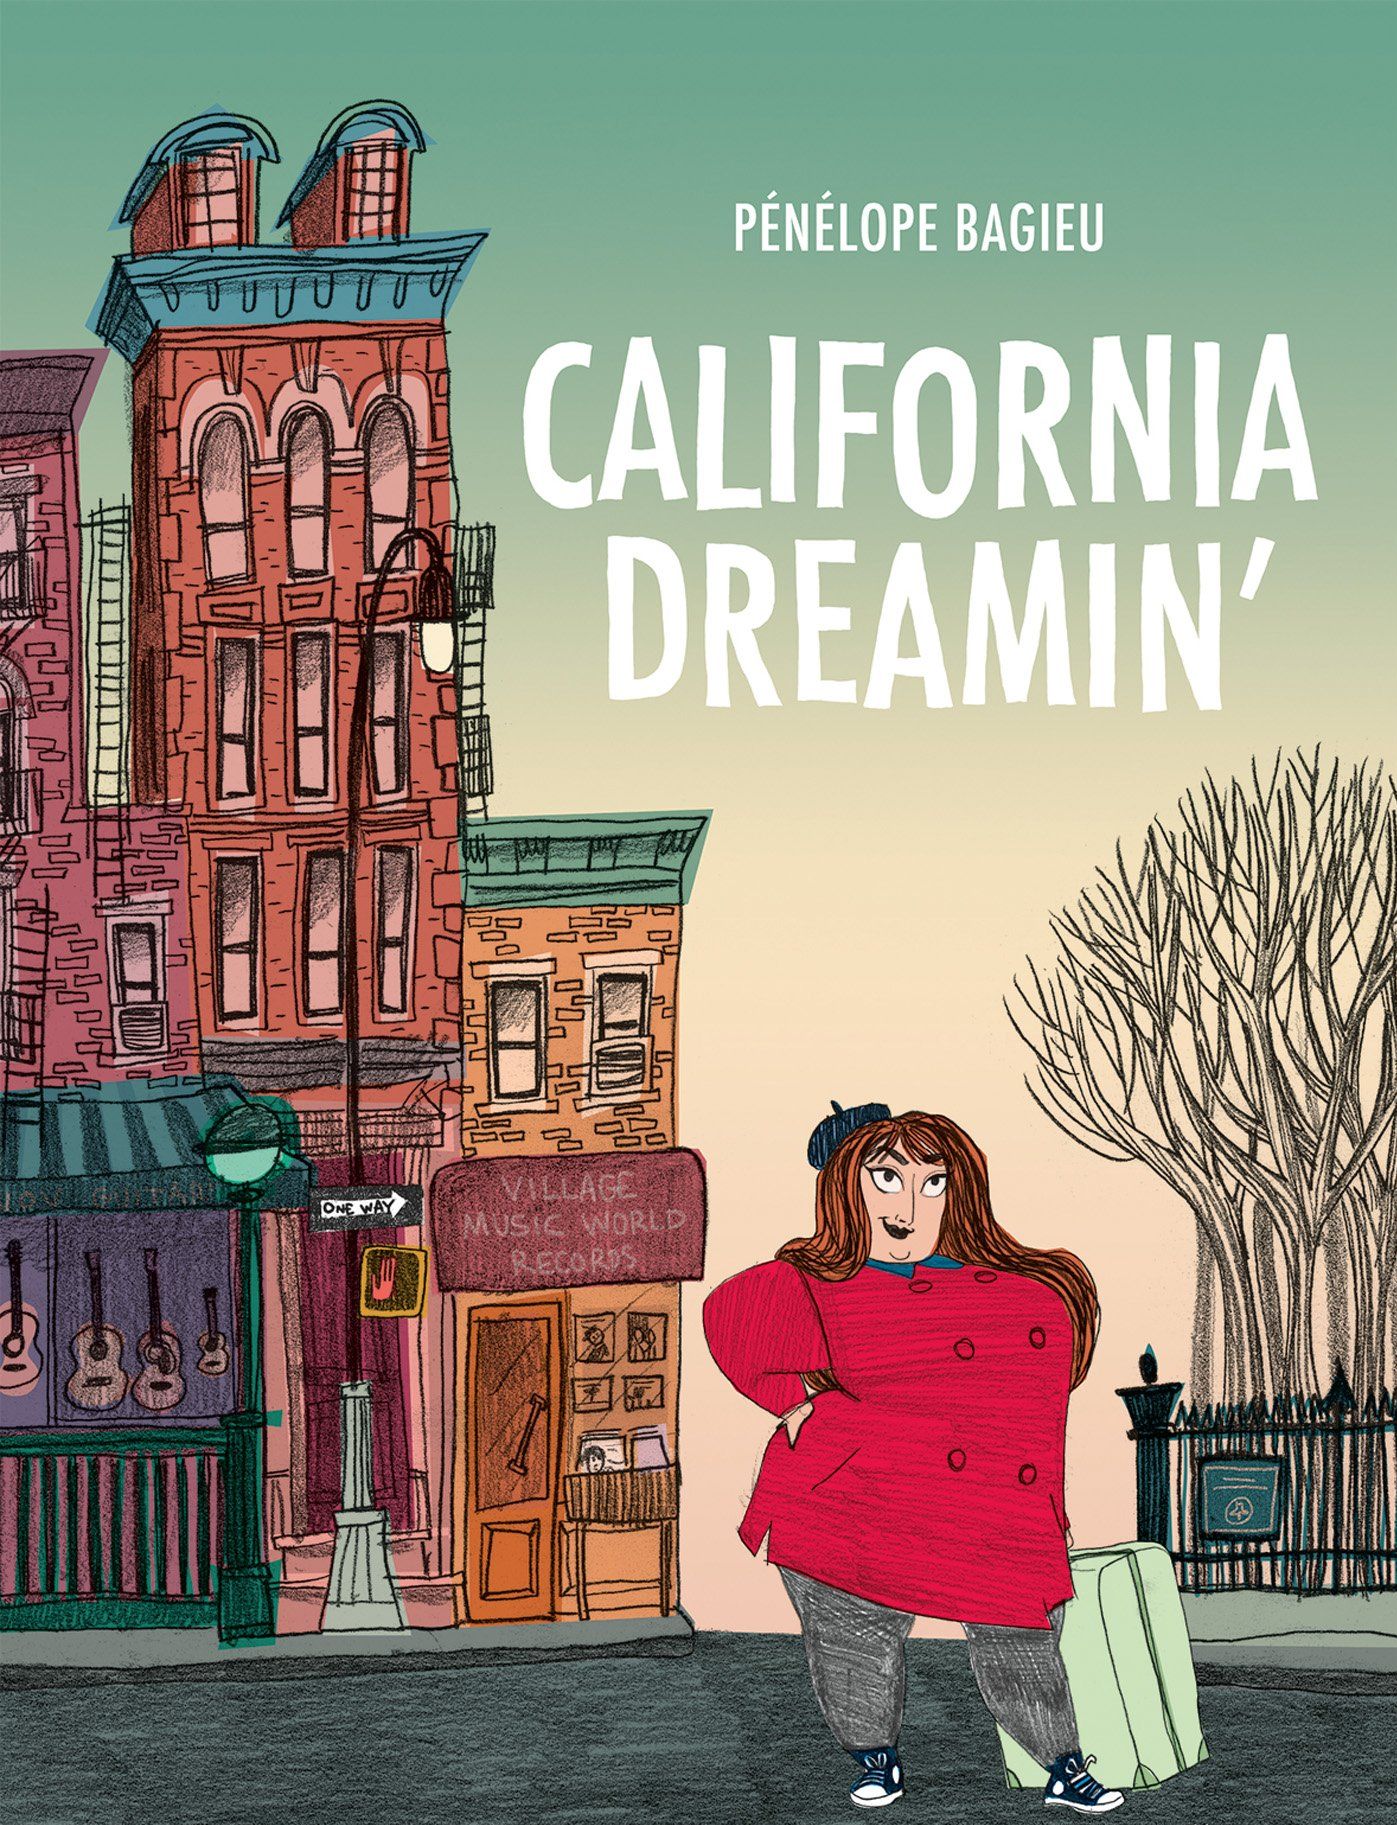 Spiraken Book Review: California Dreaming